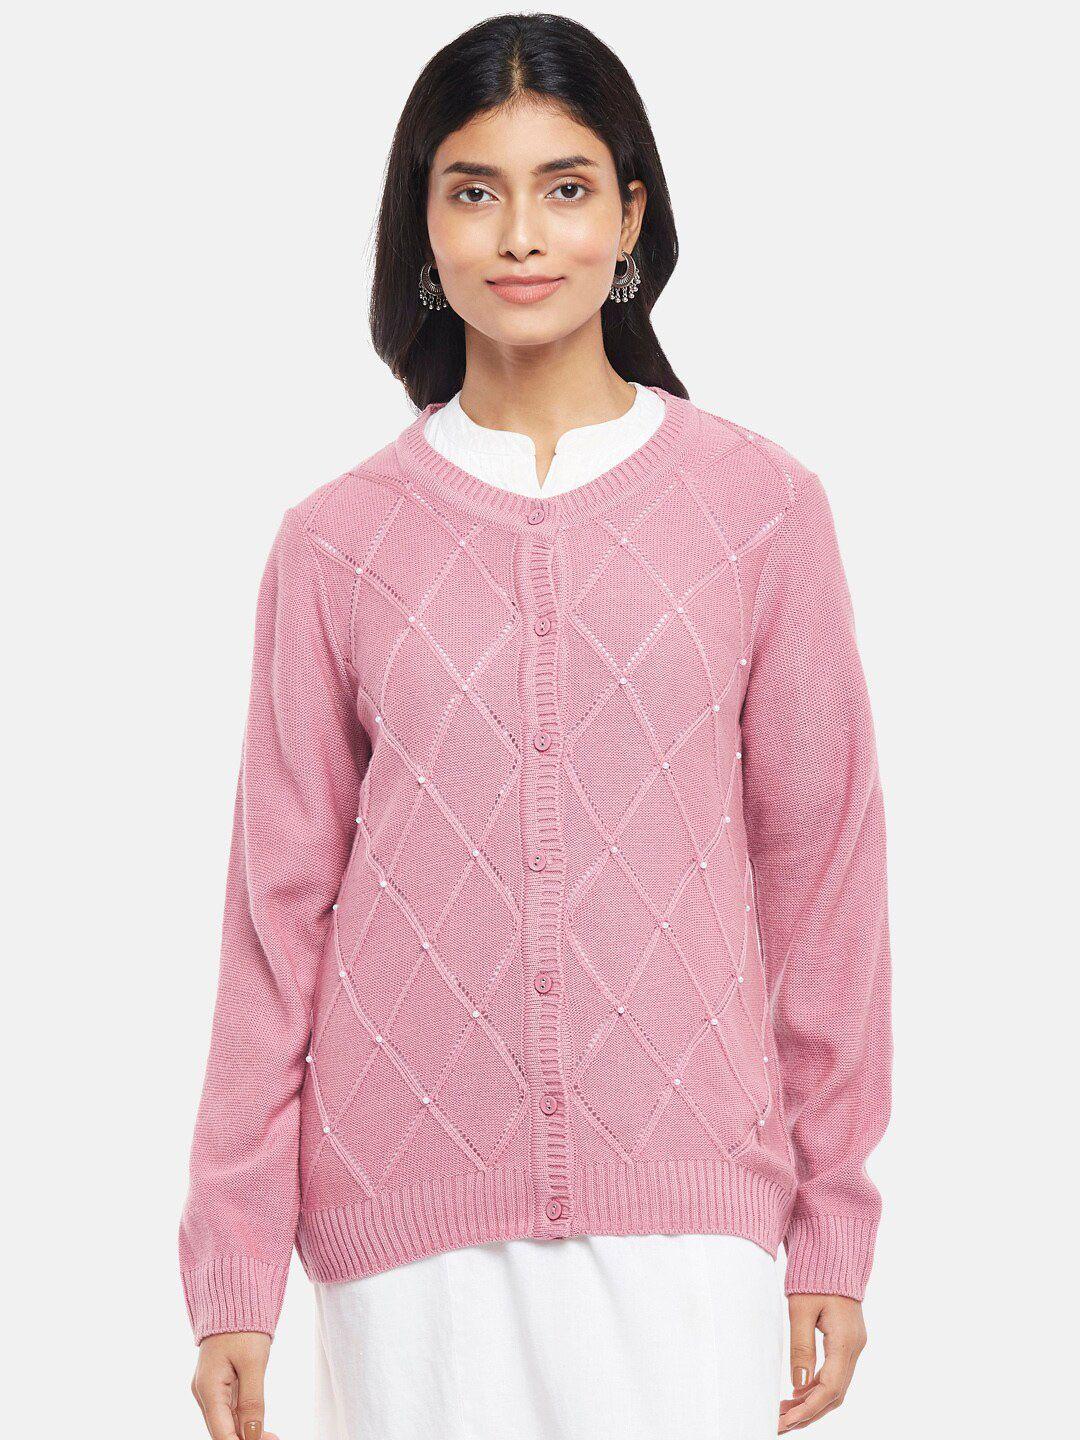 rangmanch by pantaloons women pink open knit acrylic cardigan